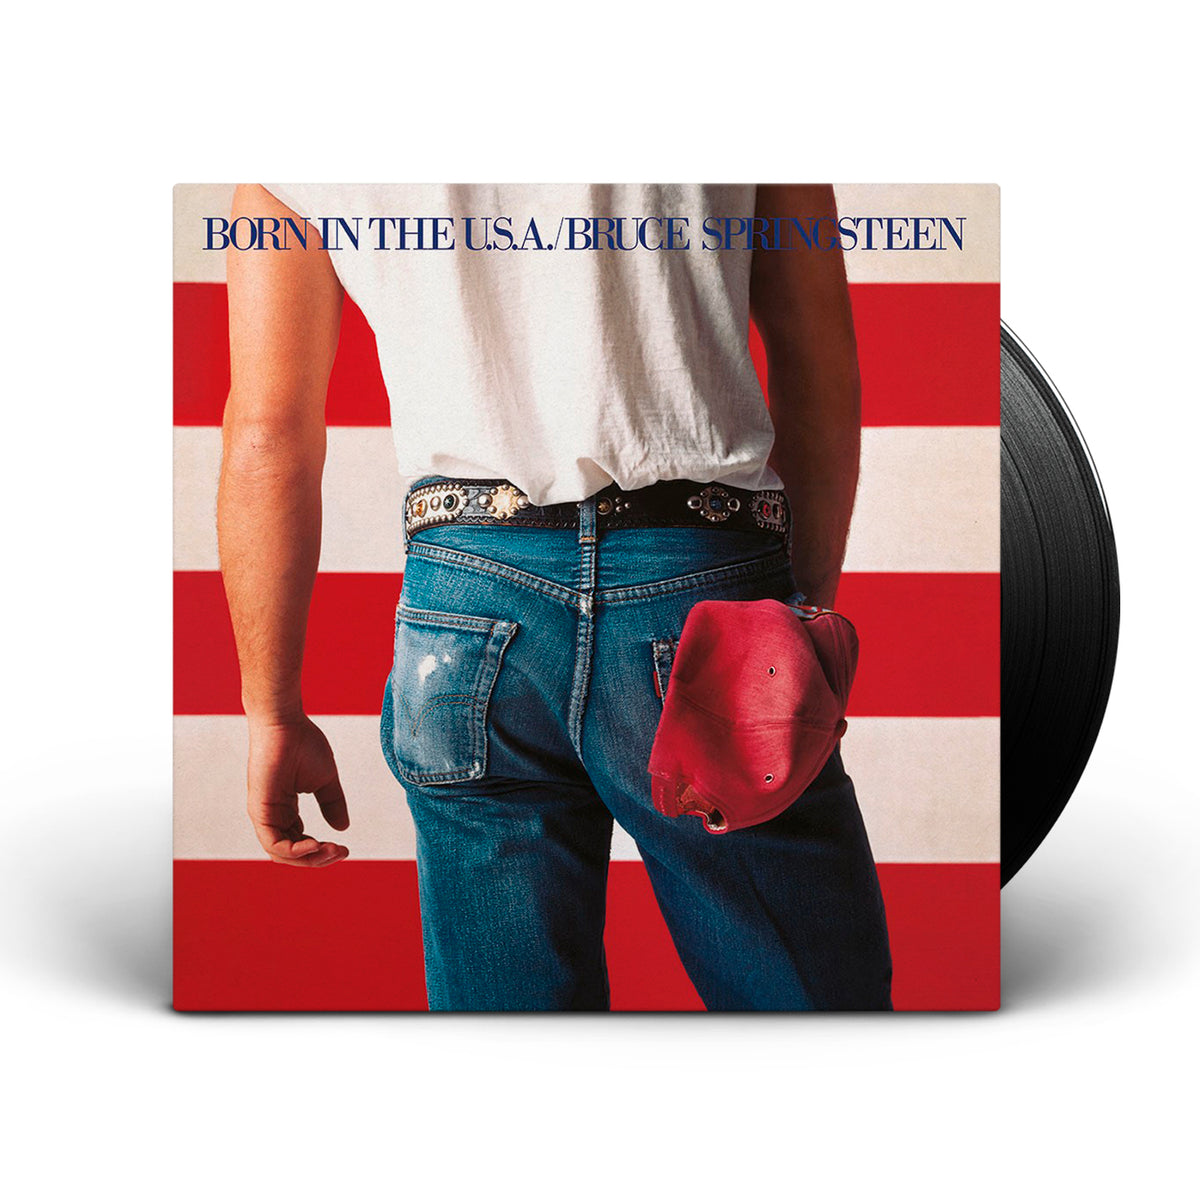 LP - Born in the U.S.A. (40th Anniversary Edition) - Red Vinyl